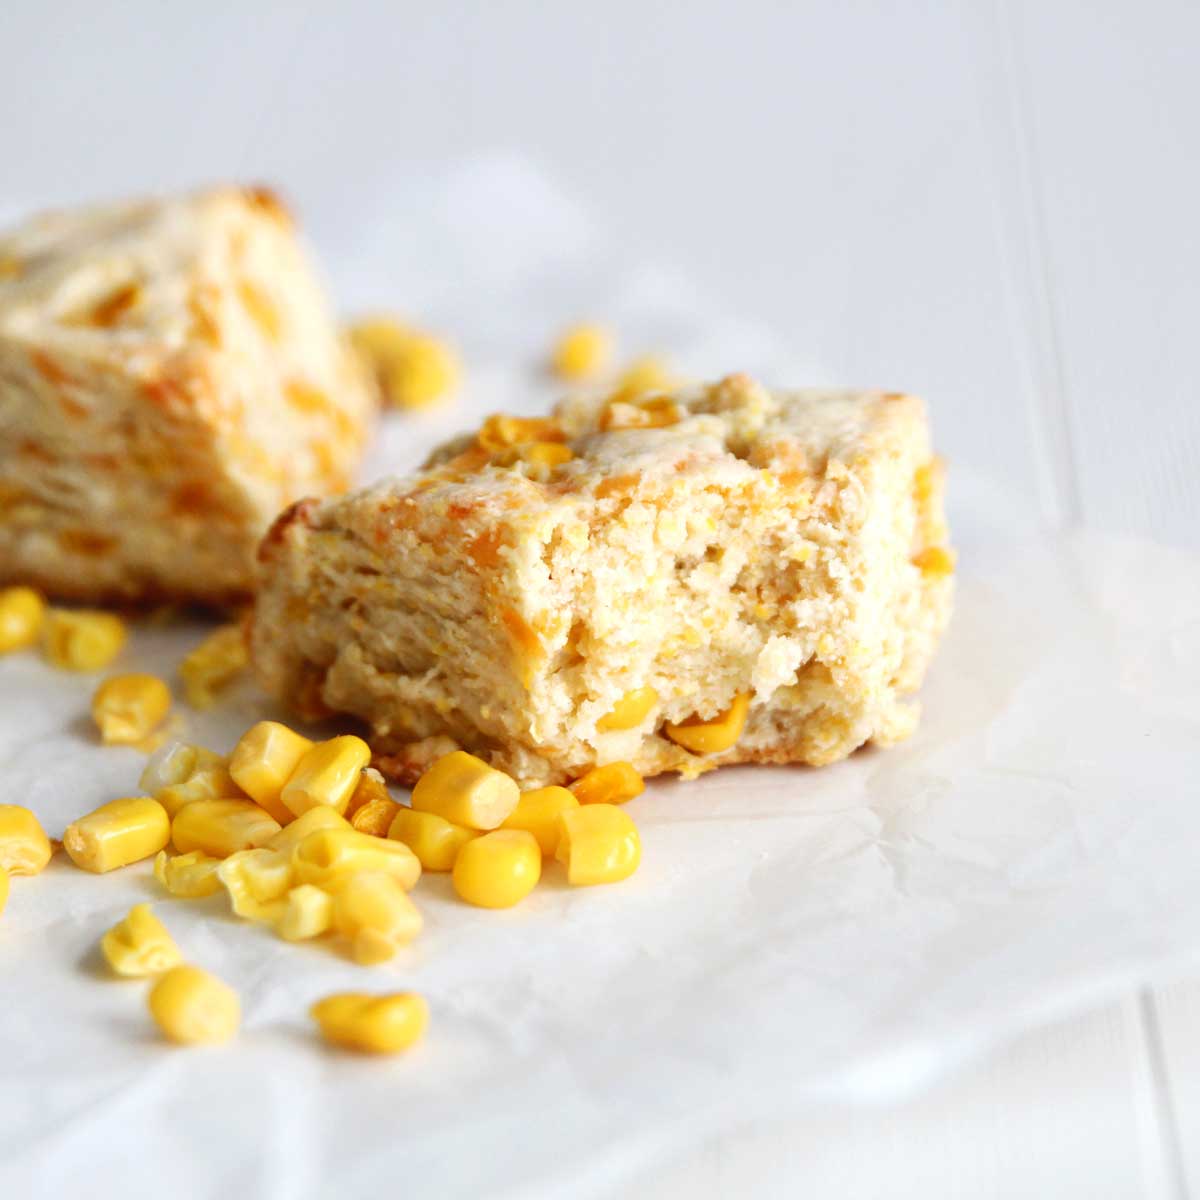 Homemade Savory Corn Scones with Cheddar & Sour Cream - Cauliflower Everything Bagel Scones